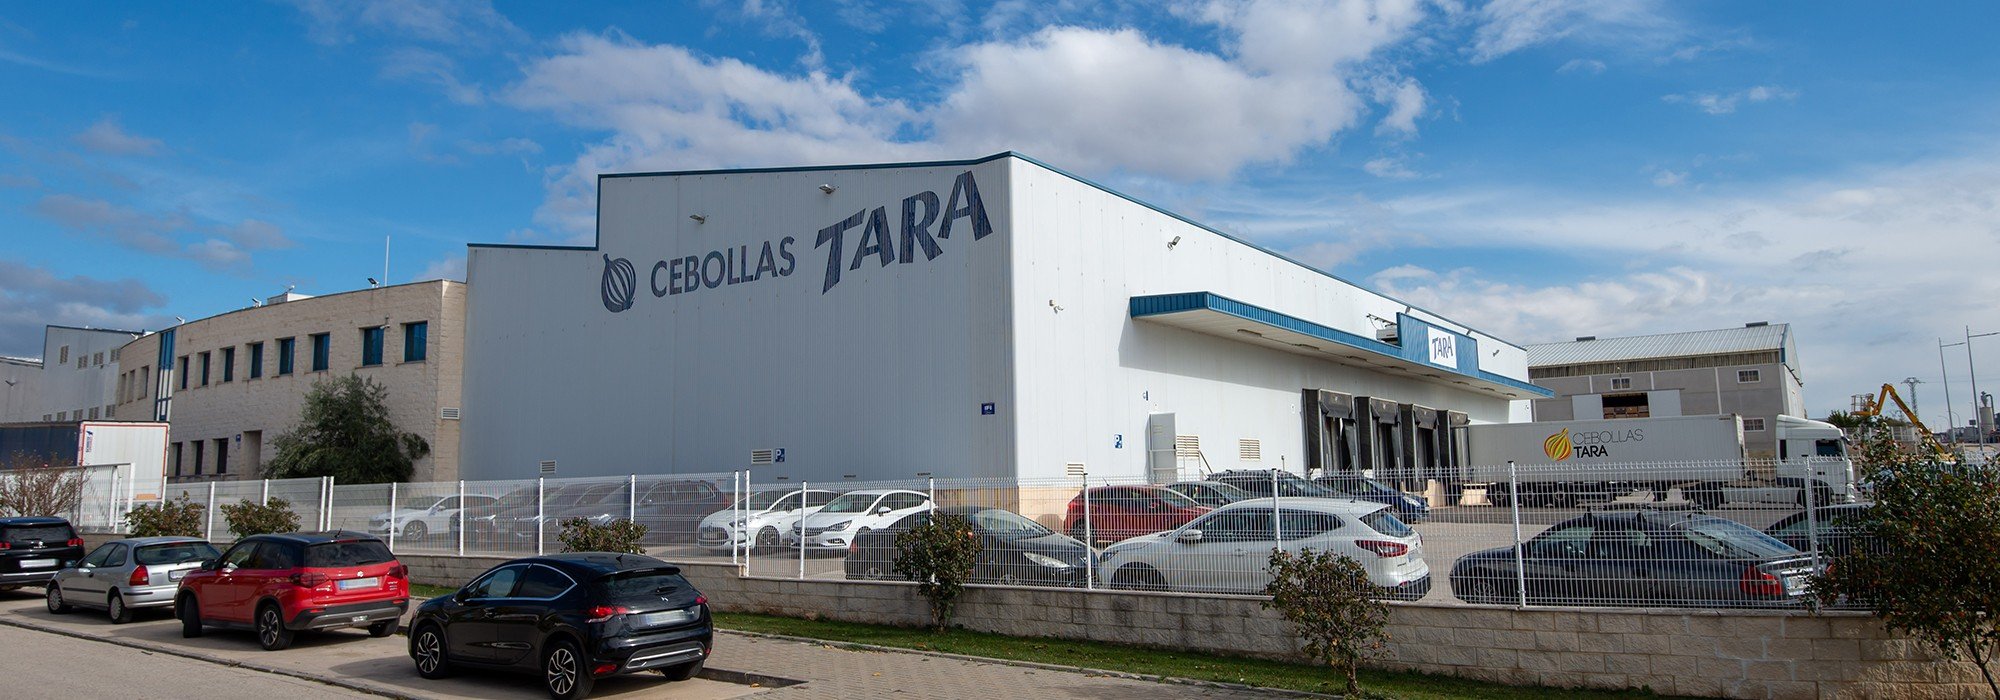 Our facilities :: Cebollas Tara :: Specialists in garlic and onion